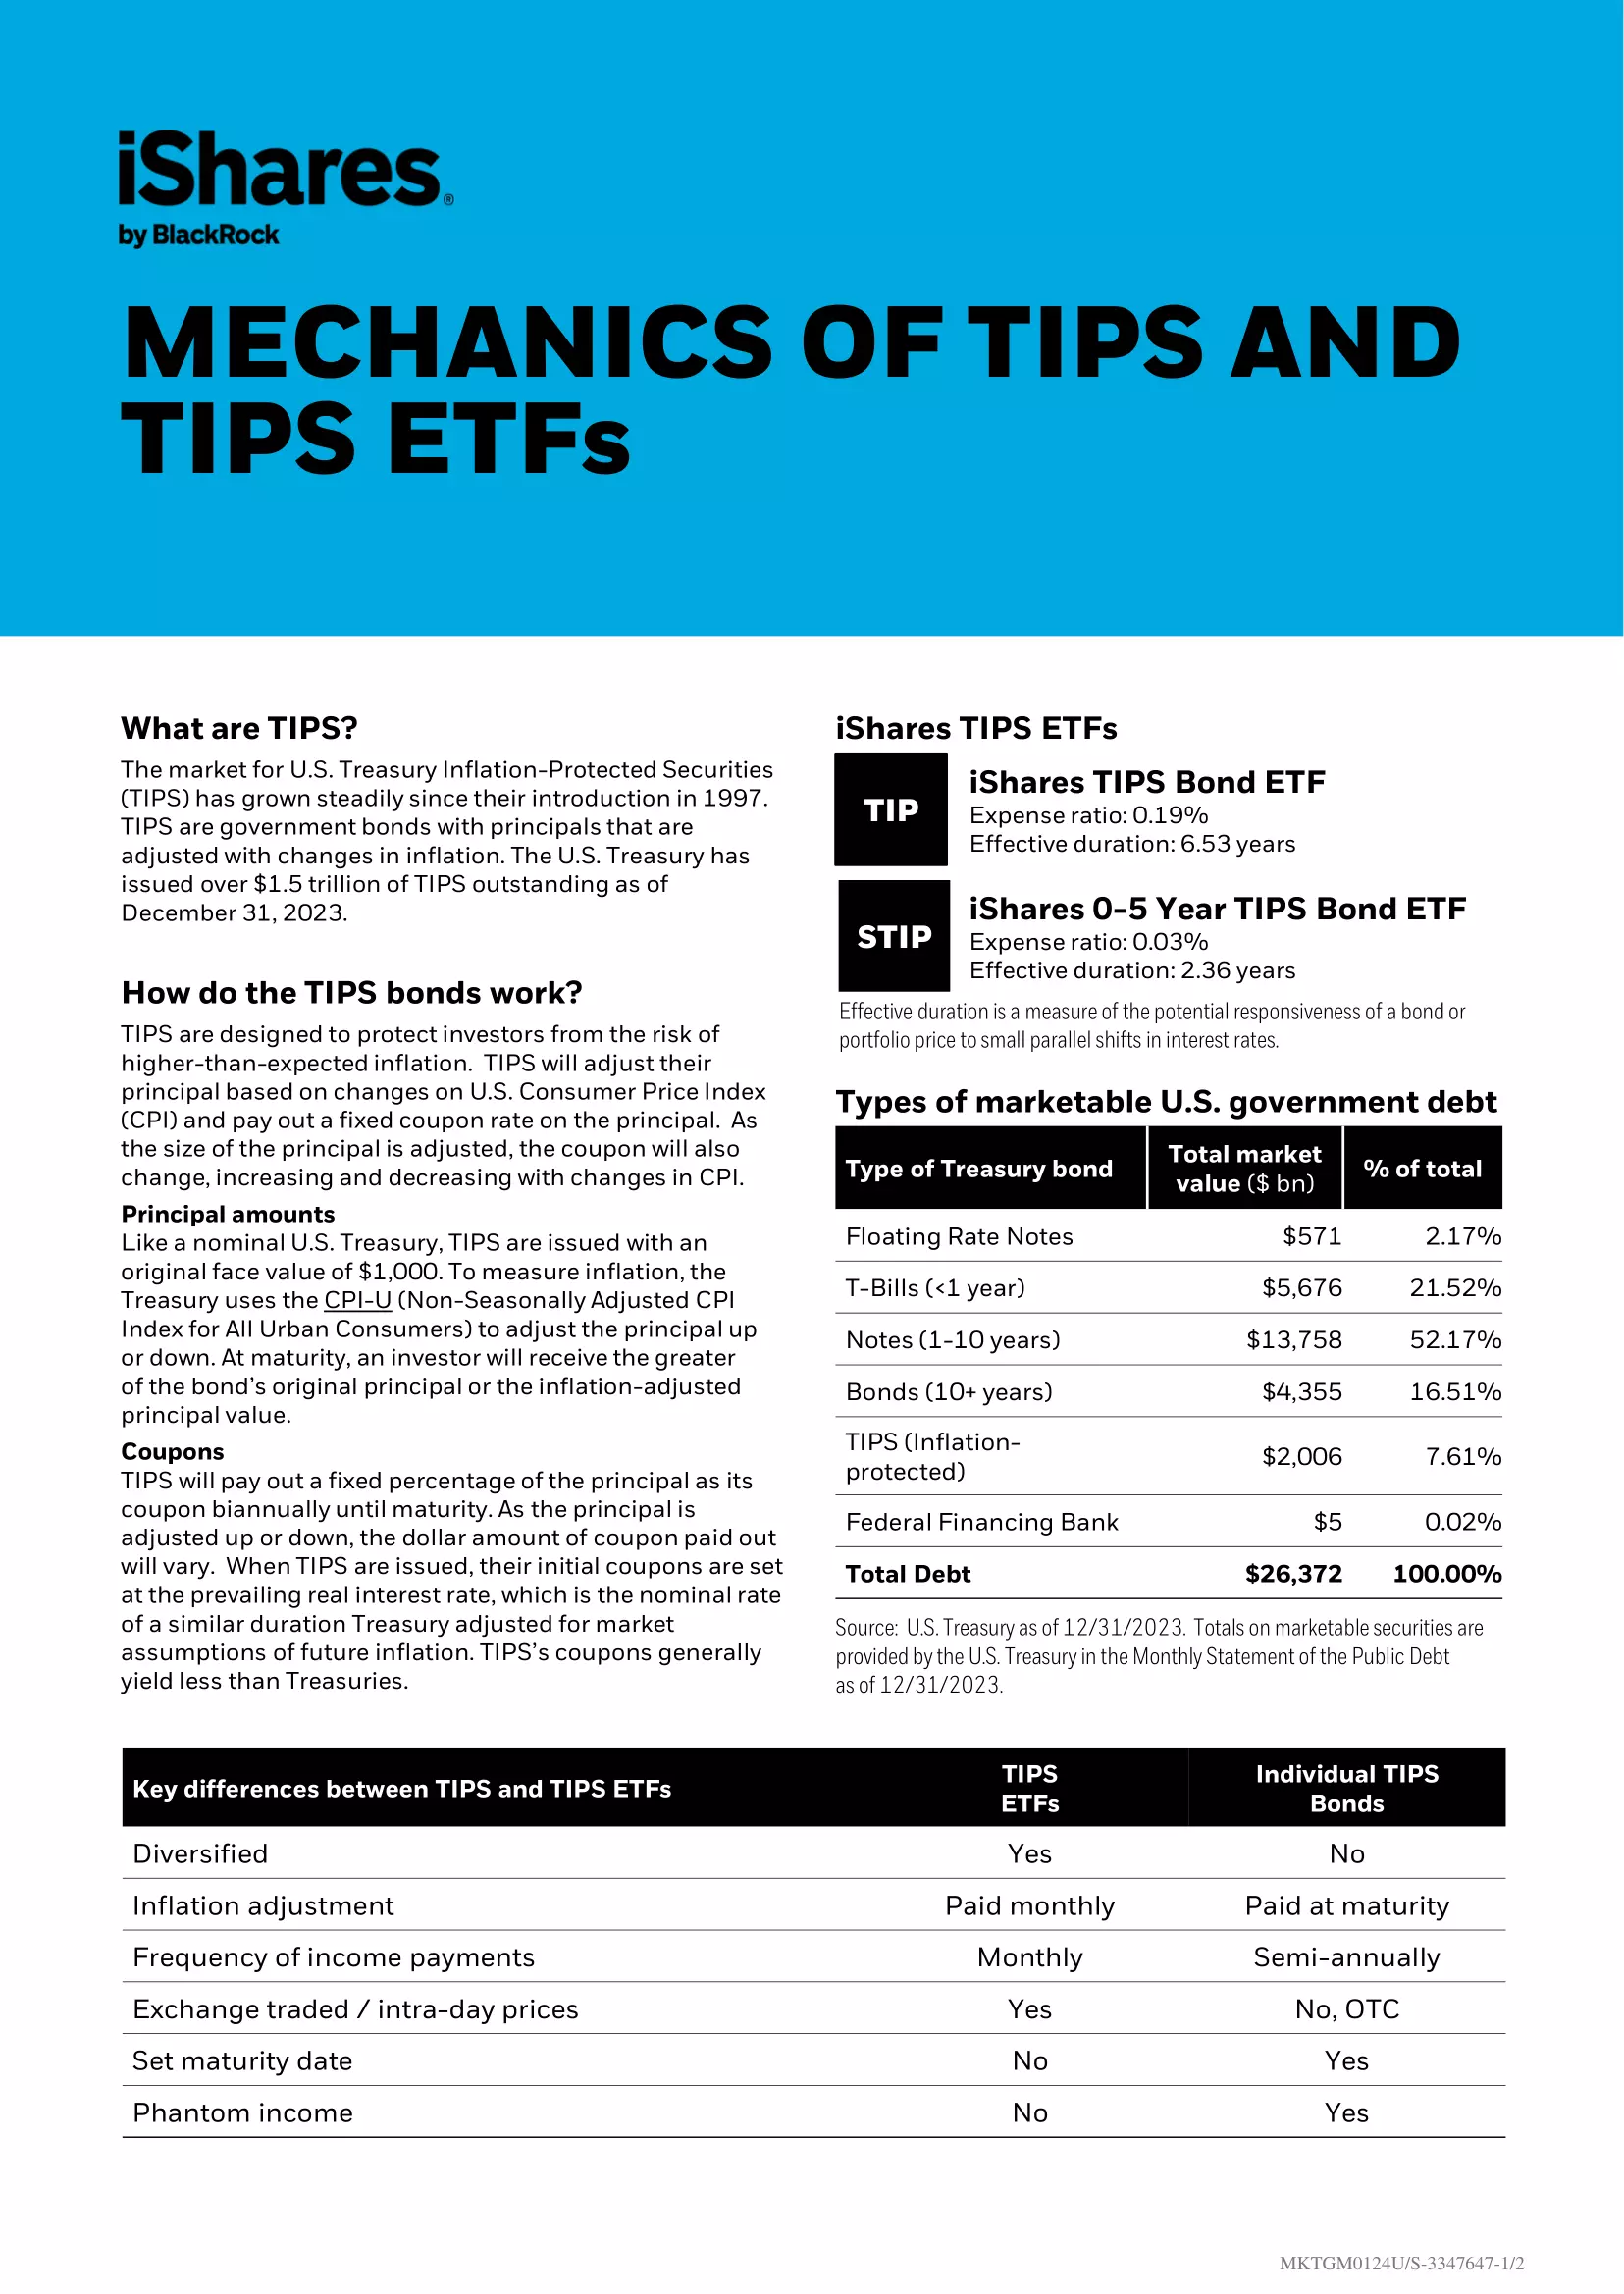 STIP: iShares 0-5 Year TIPS Bond ETF